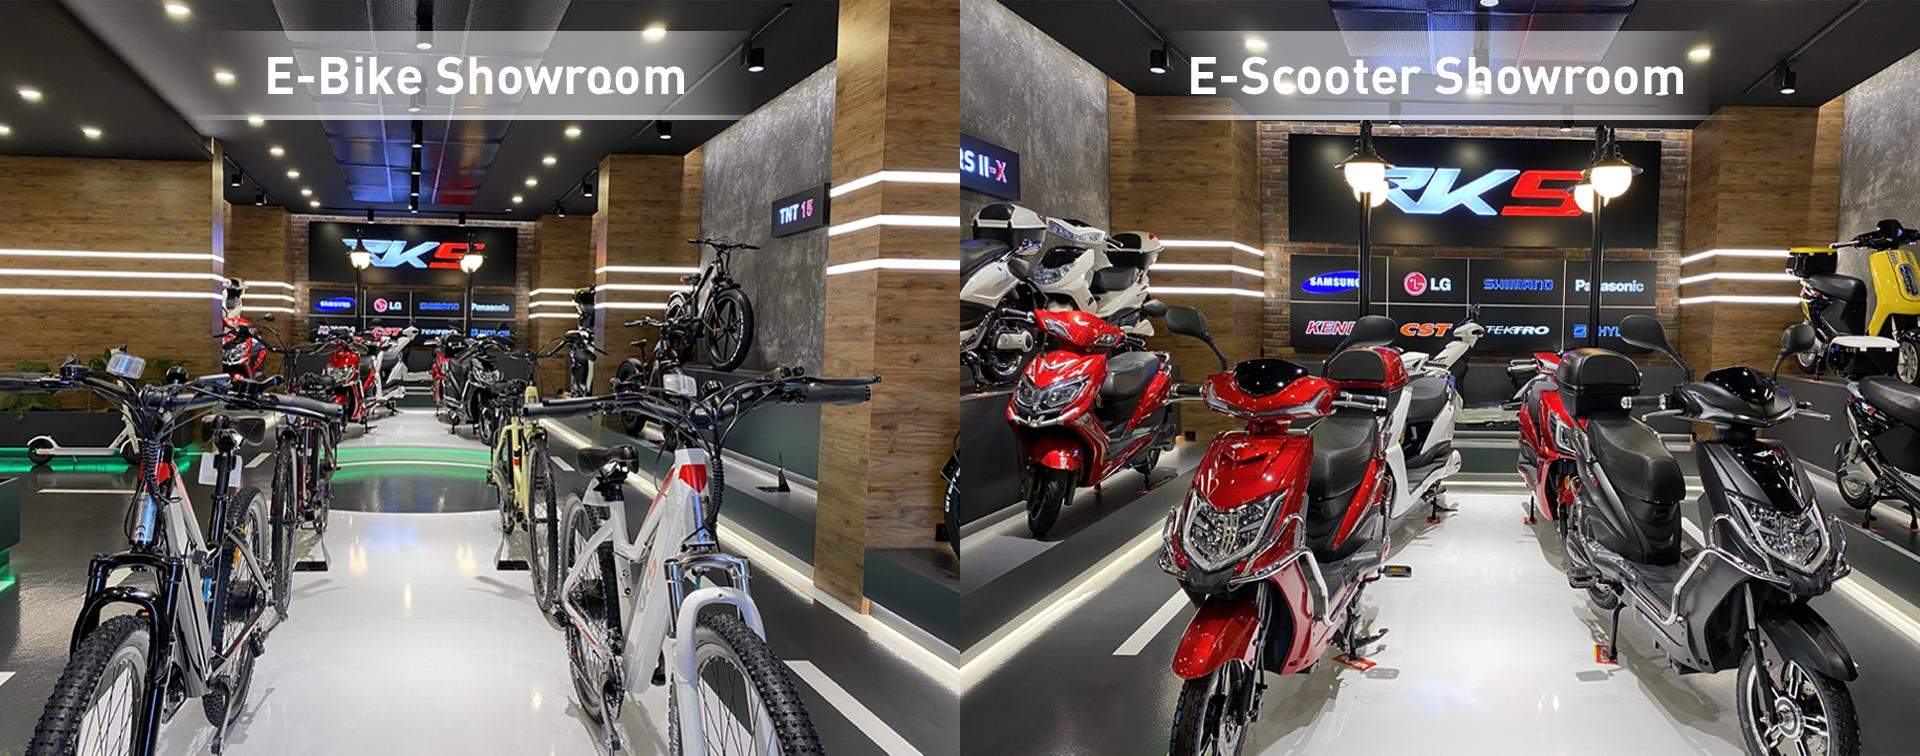 E-Bike / E-Scooter Showroom